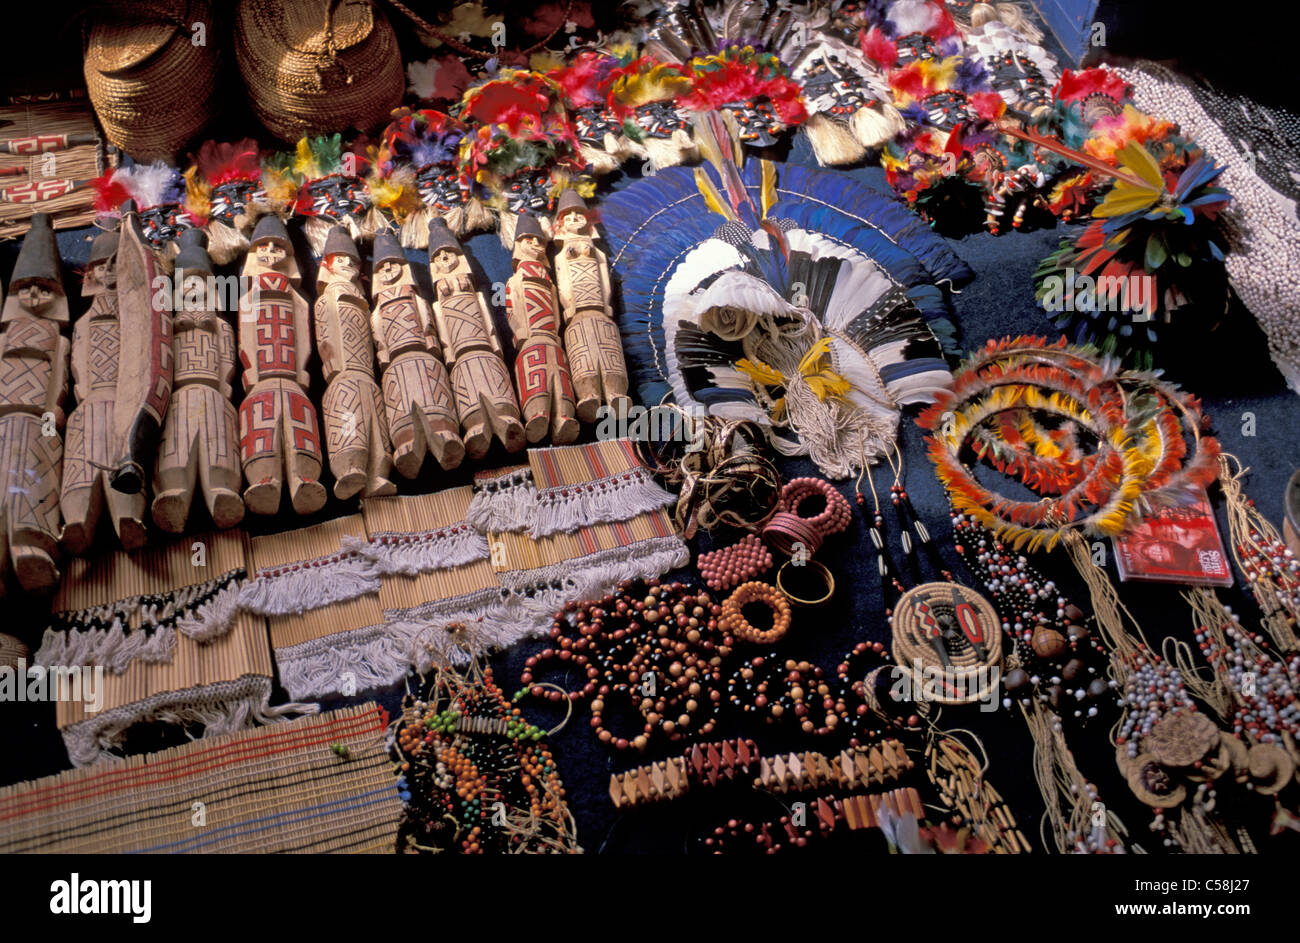 Indian Crafts, Market, Brasilia, Brazil, South America, souvenirs Stock Photo